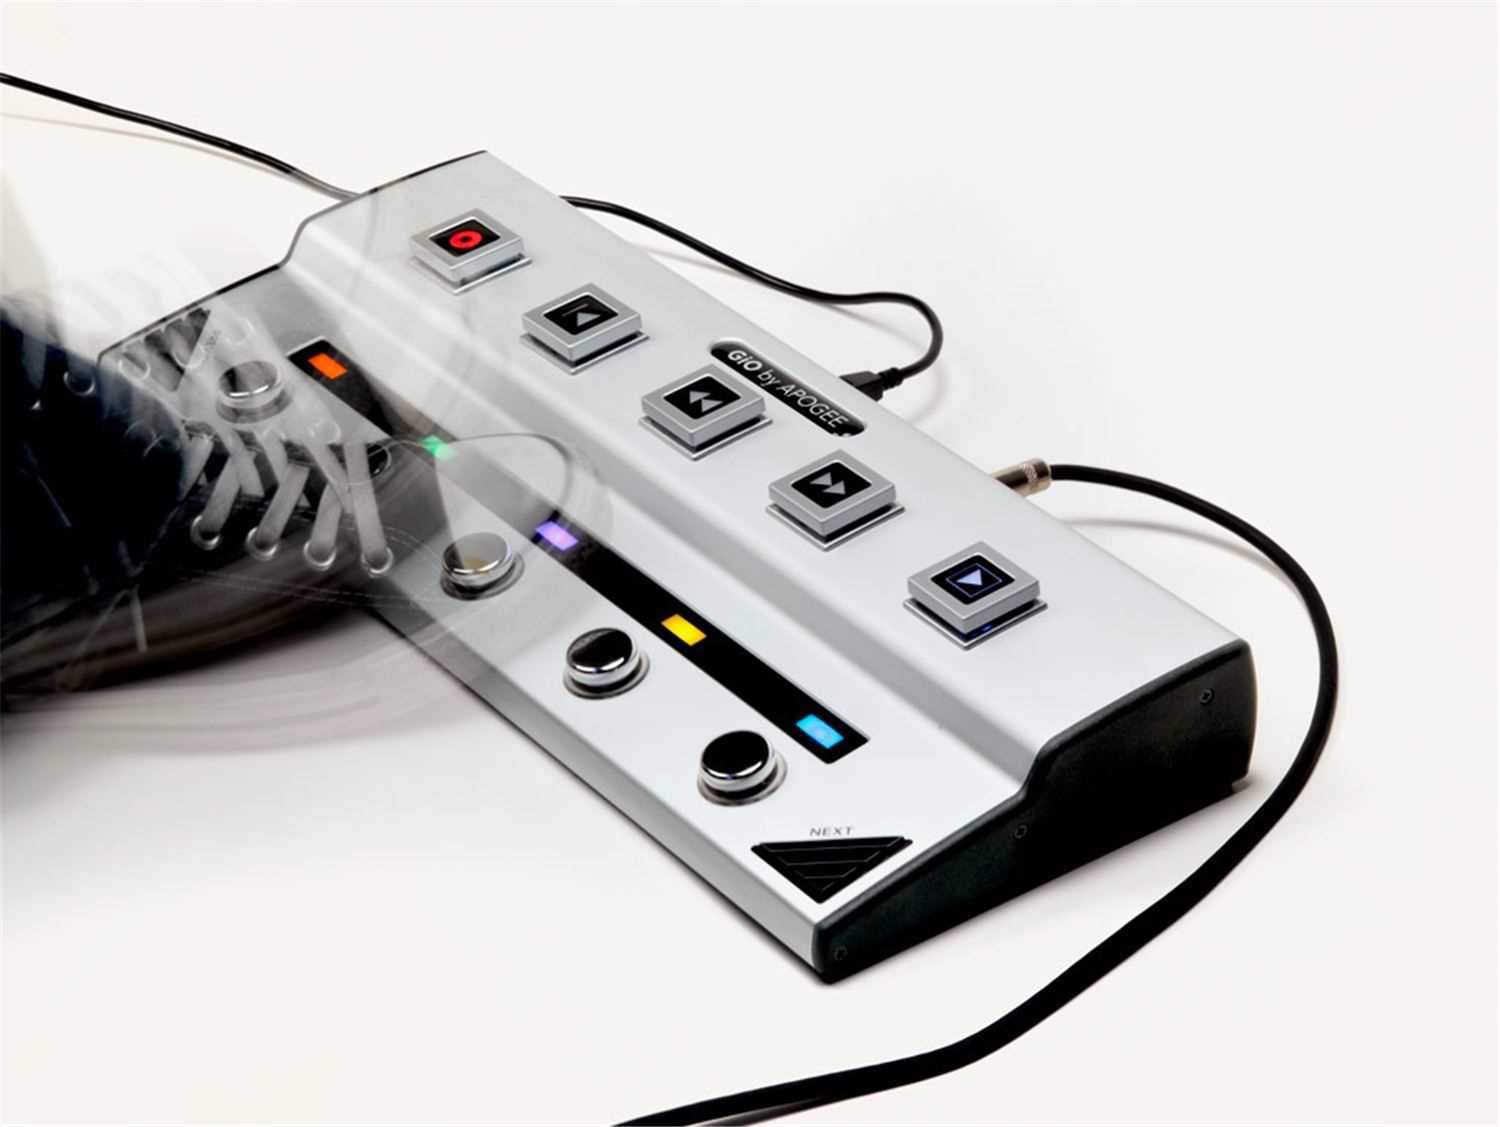 Apogee GIO USB Guitar Audio Interface for iOS Mac - ProSound and Stage Lighting